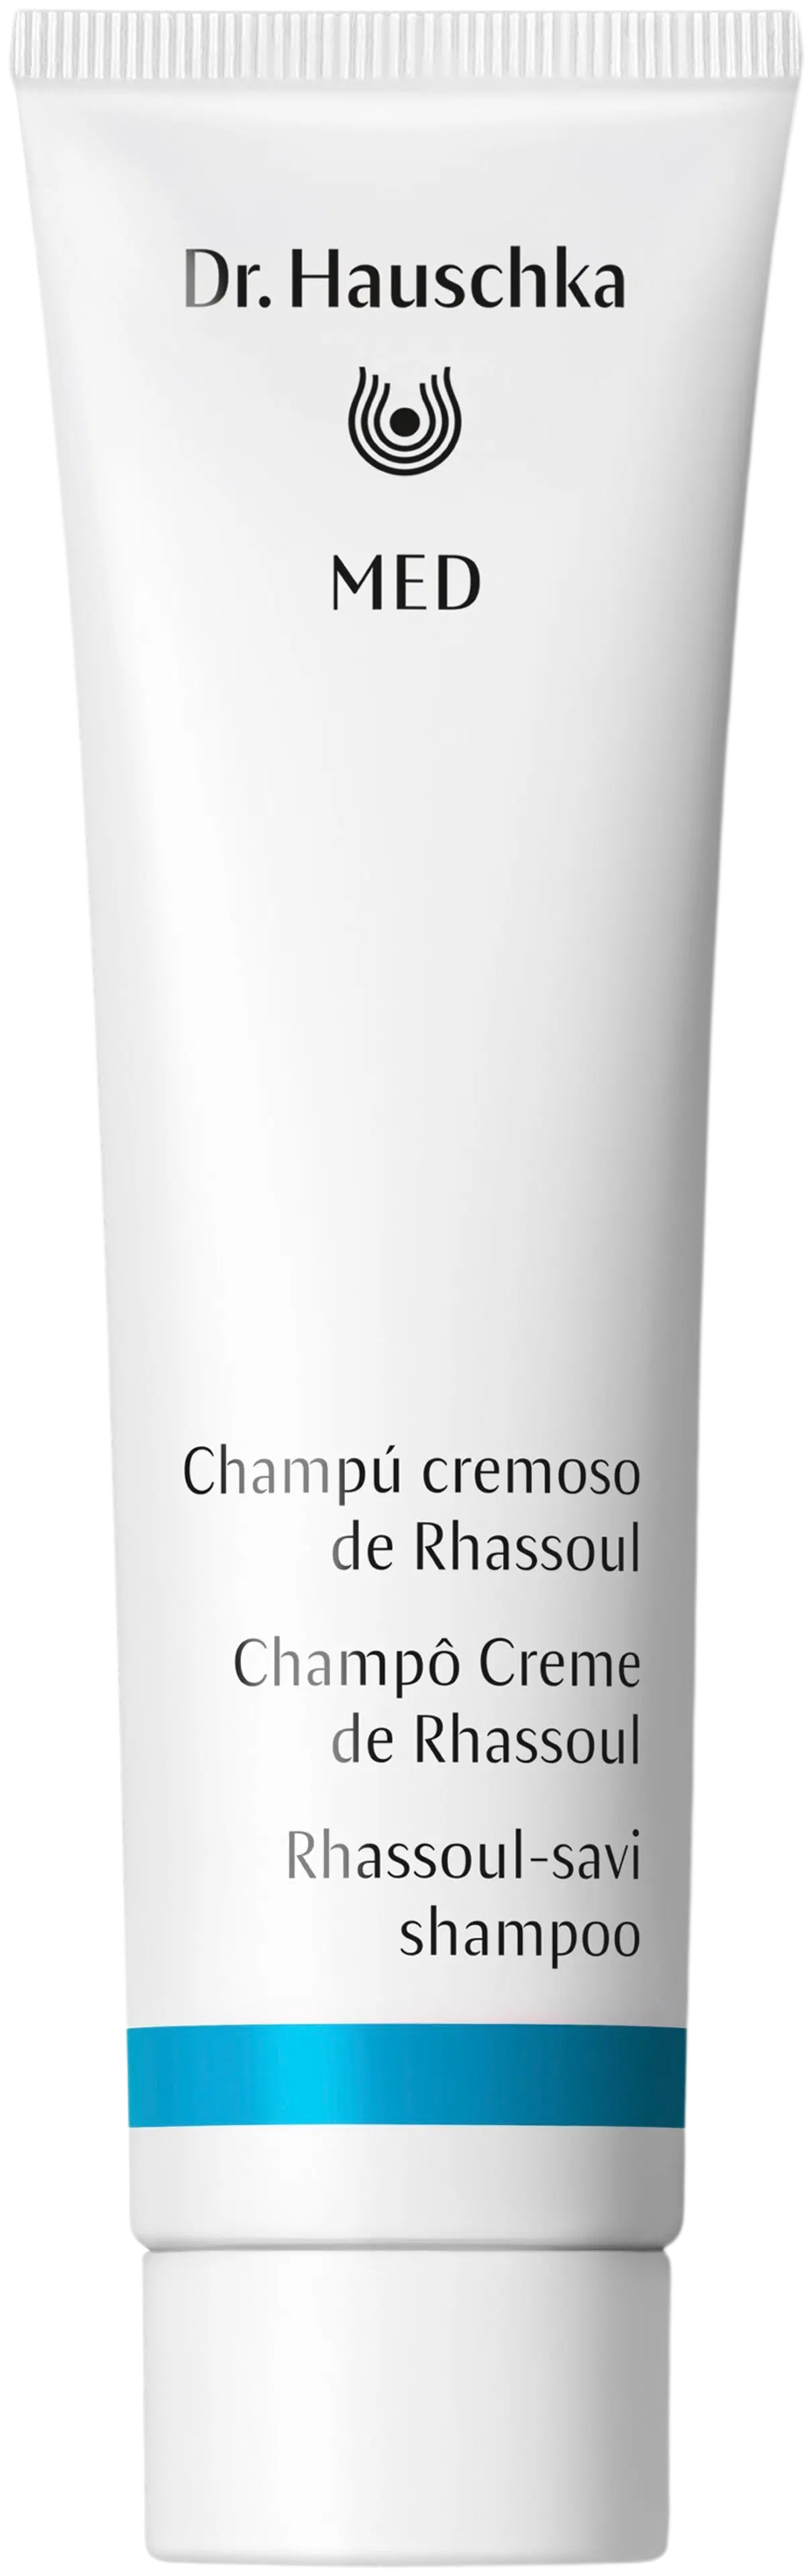 Dr. Hauschka Rhassoul-savi shampoo 150 ml